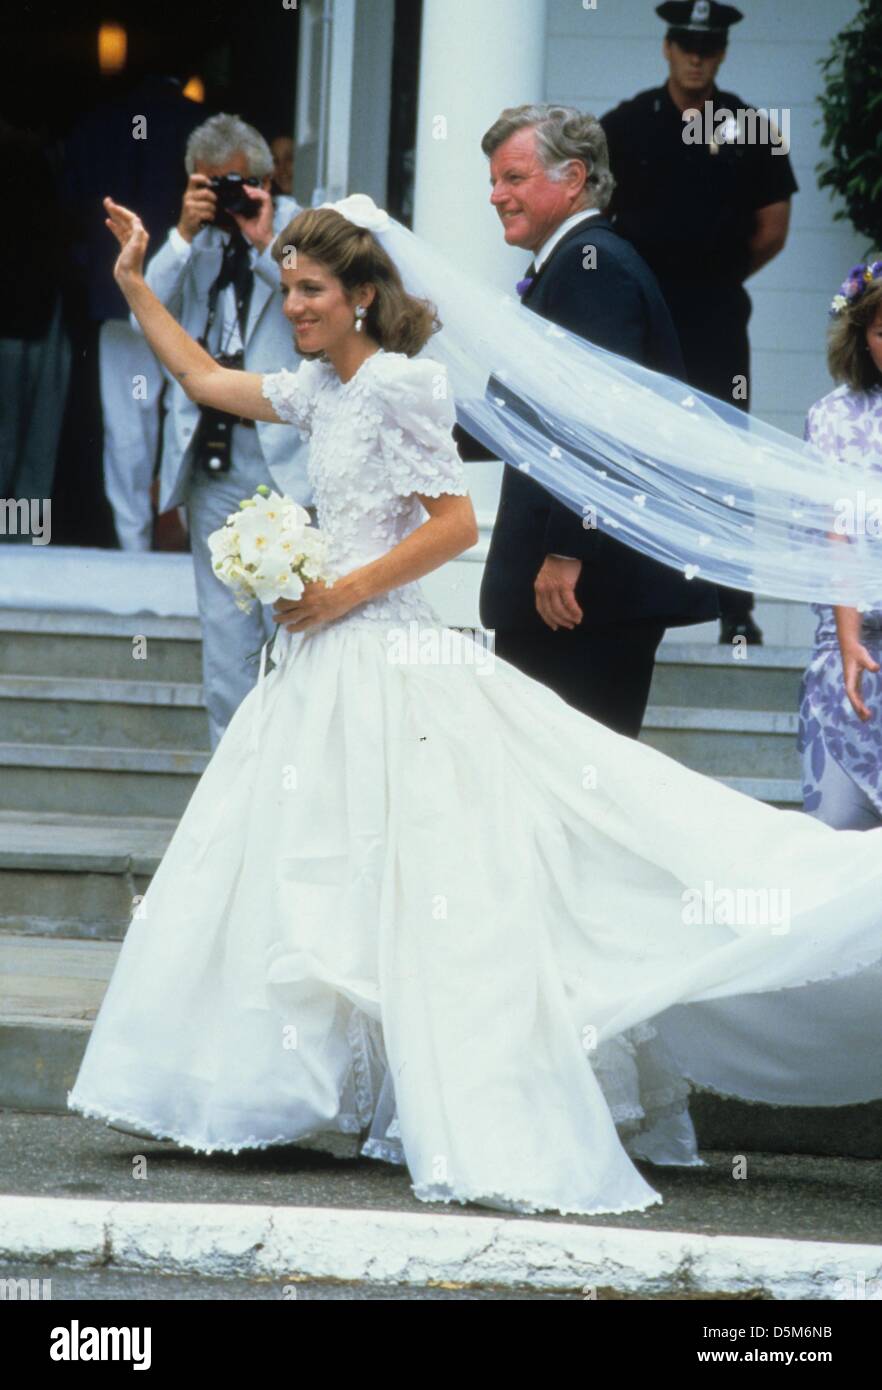 Caroline kennedy wedding fotografías e imágenes de alta resolución - Alamy